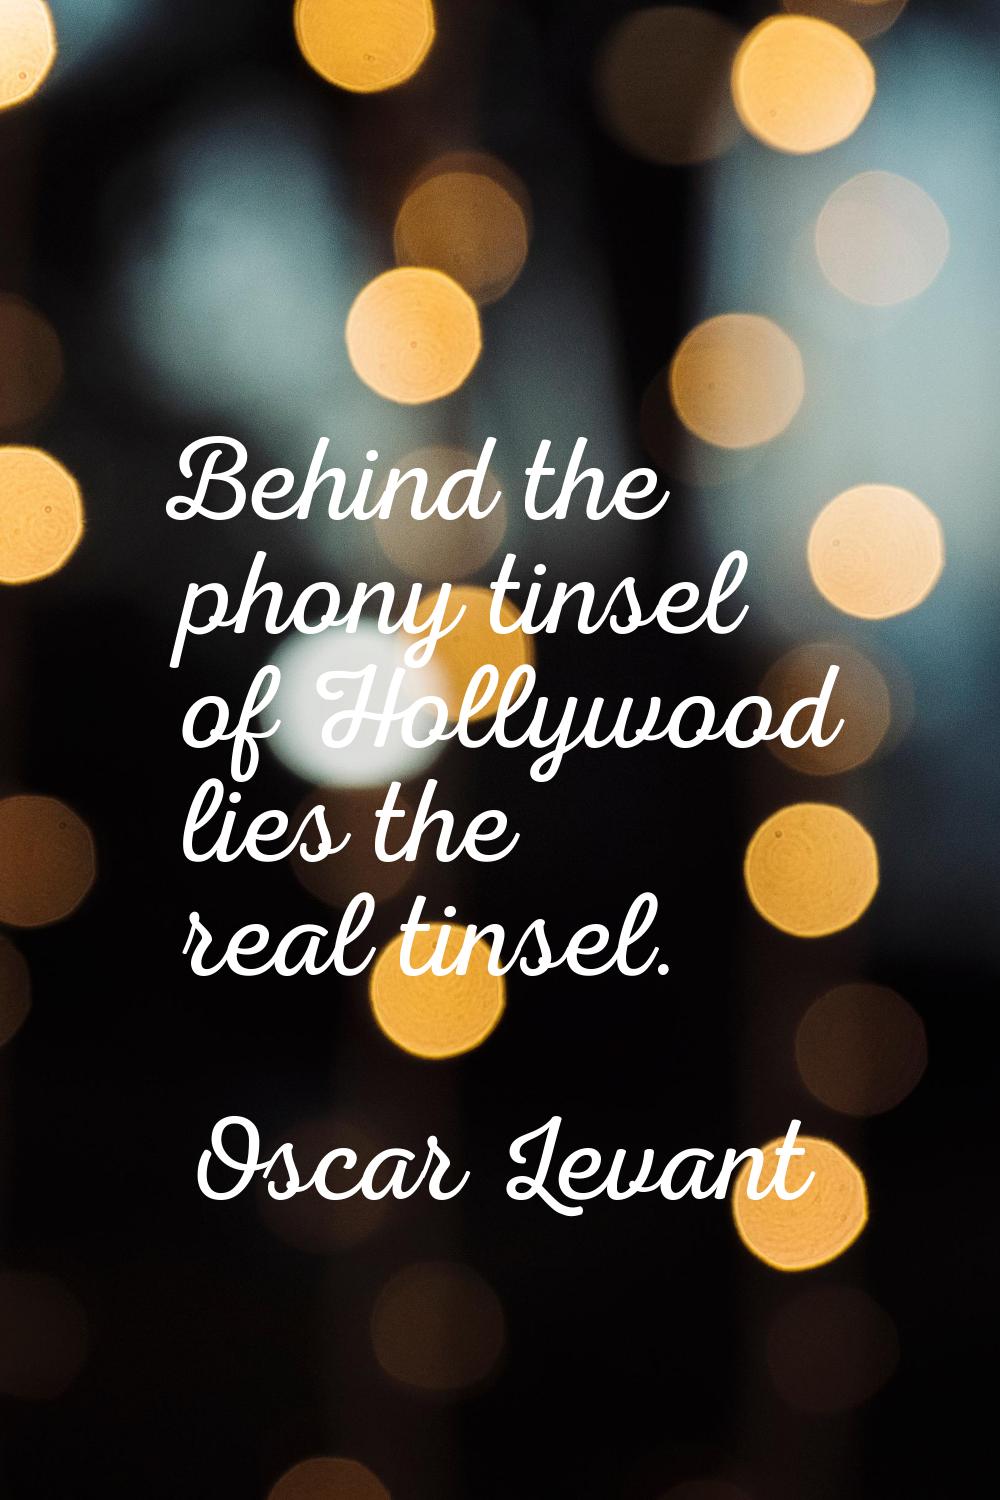 Behind the phony tinsel of Hollywood lies the real tinsel.